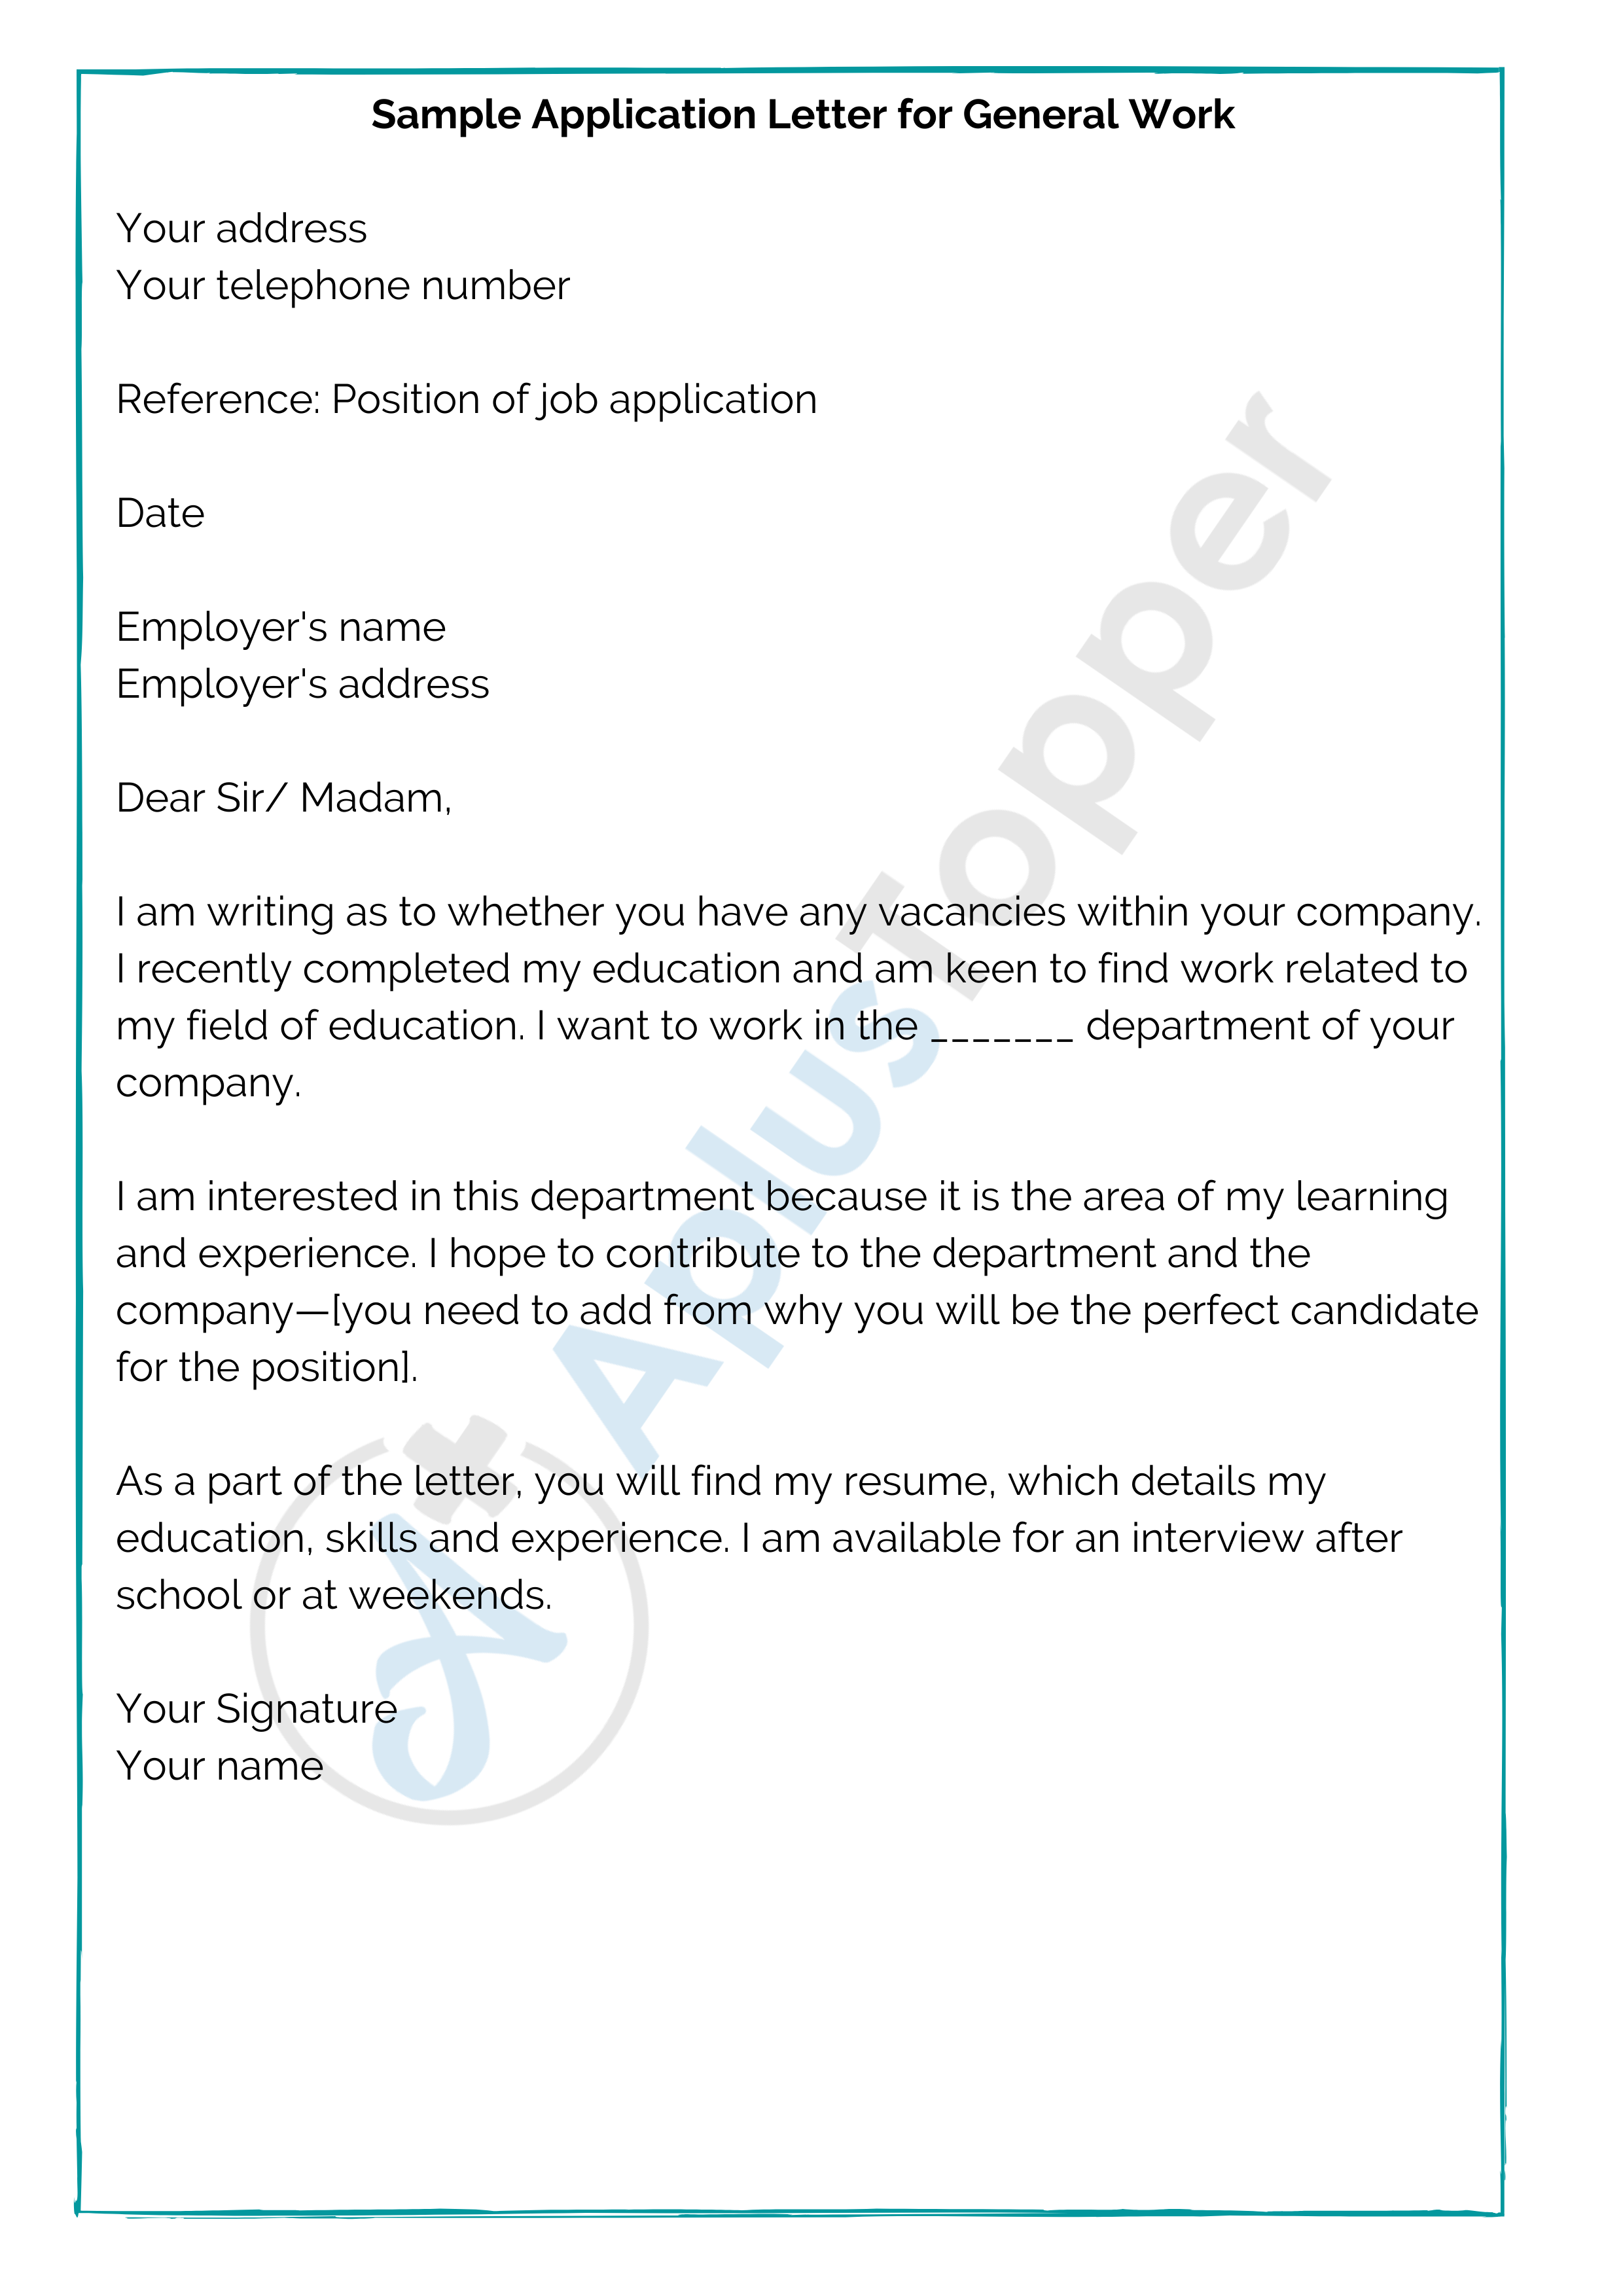 Sample Application Letter for General Work